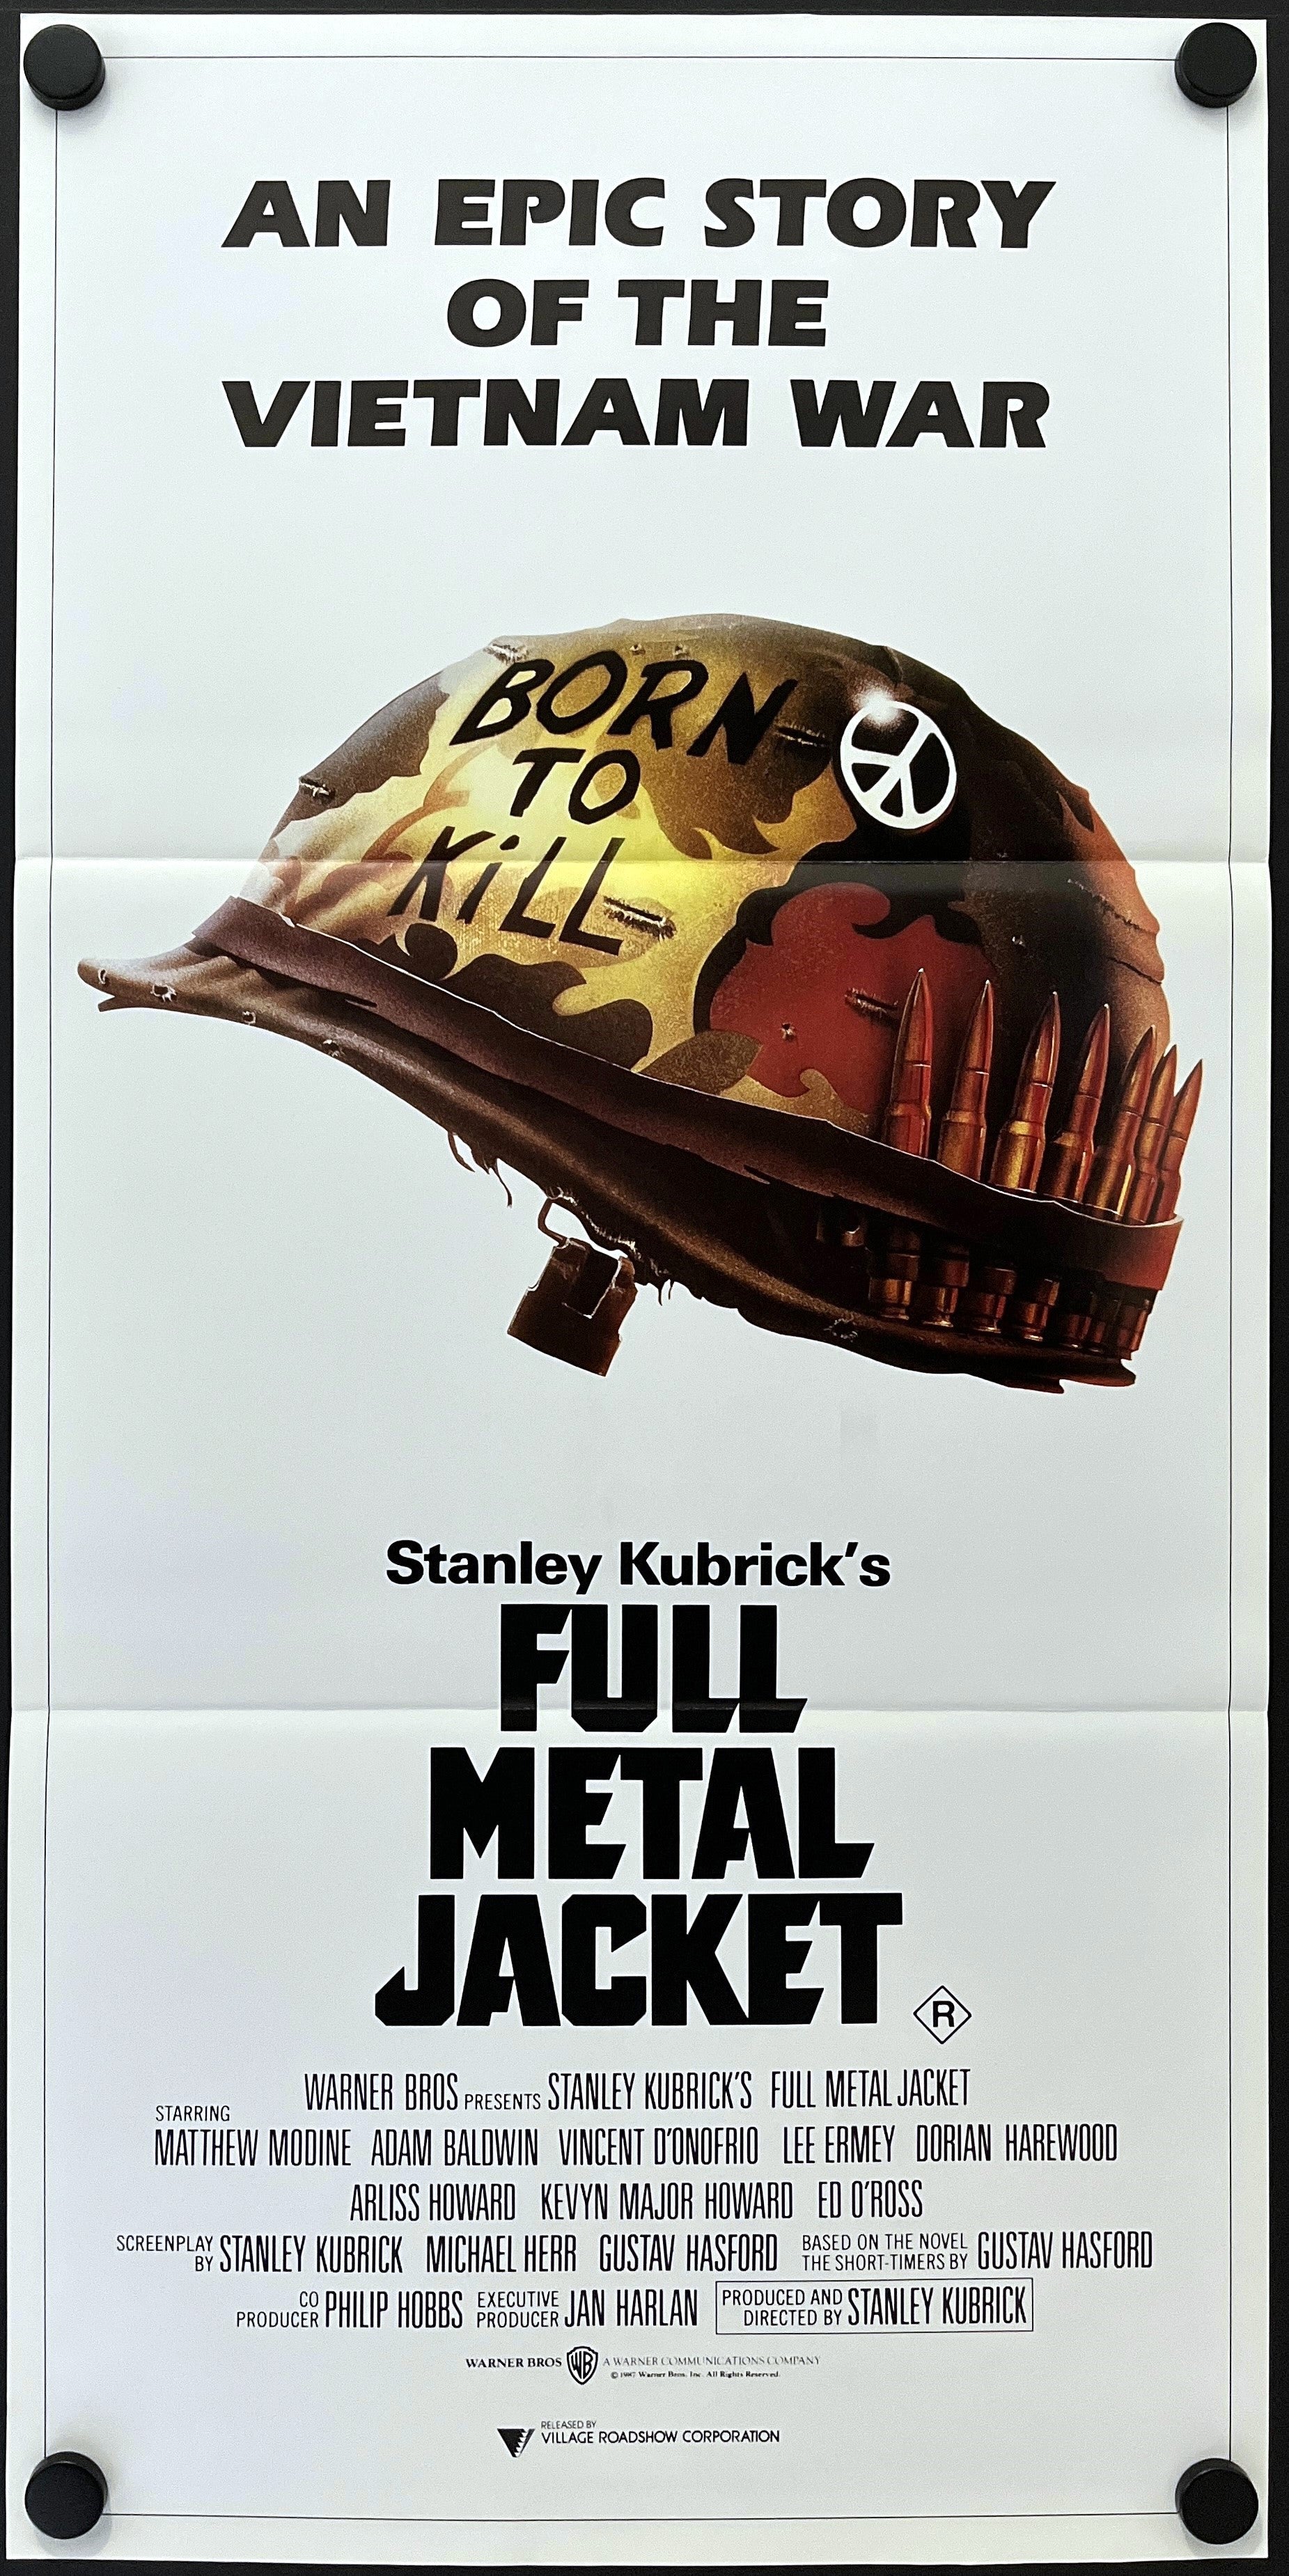 FULL METAL JACKET (1987)